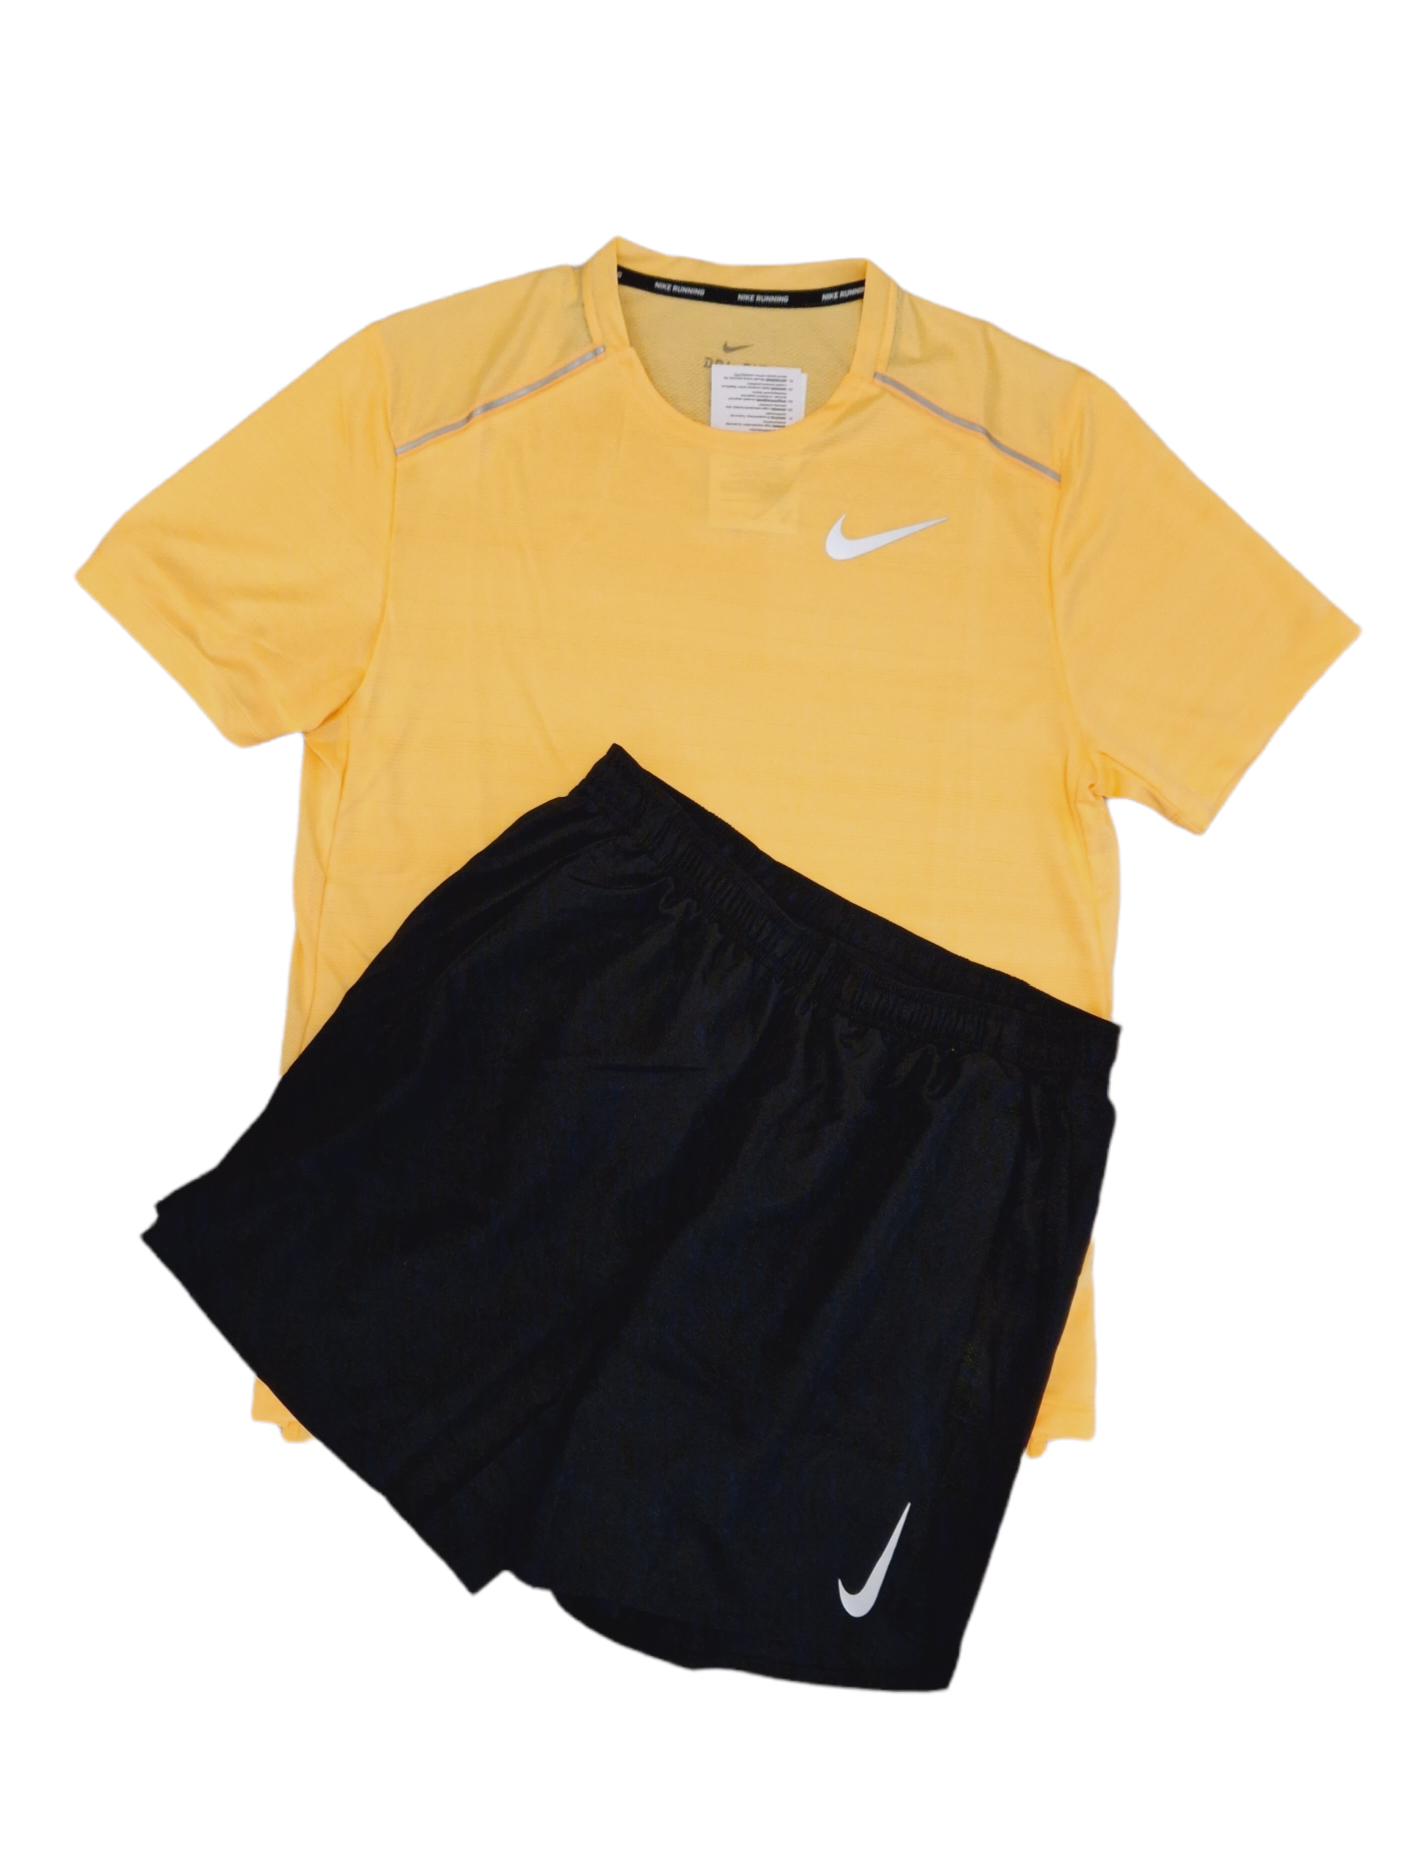 Nike Dri Fit Shorts Set Yellow/Black